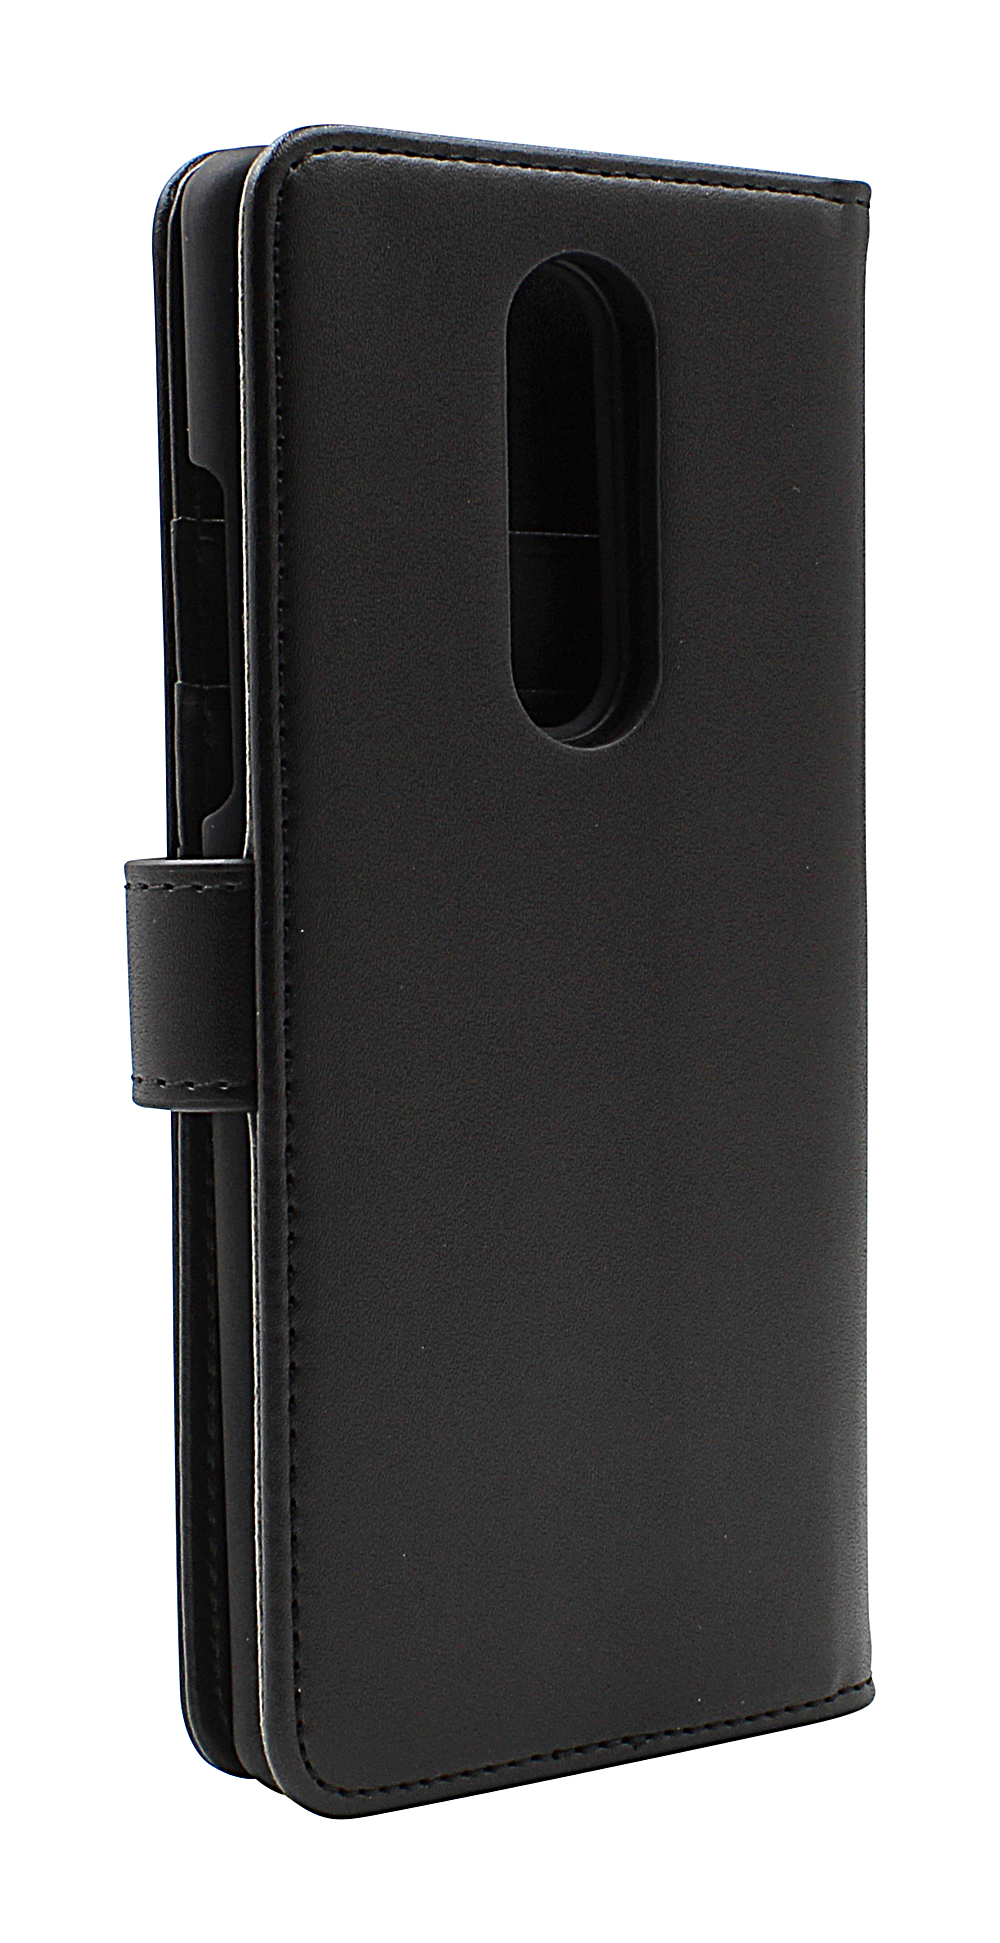 CoverInSkimblocker Magnet Fodral OnePlus 8